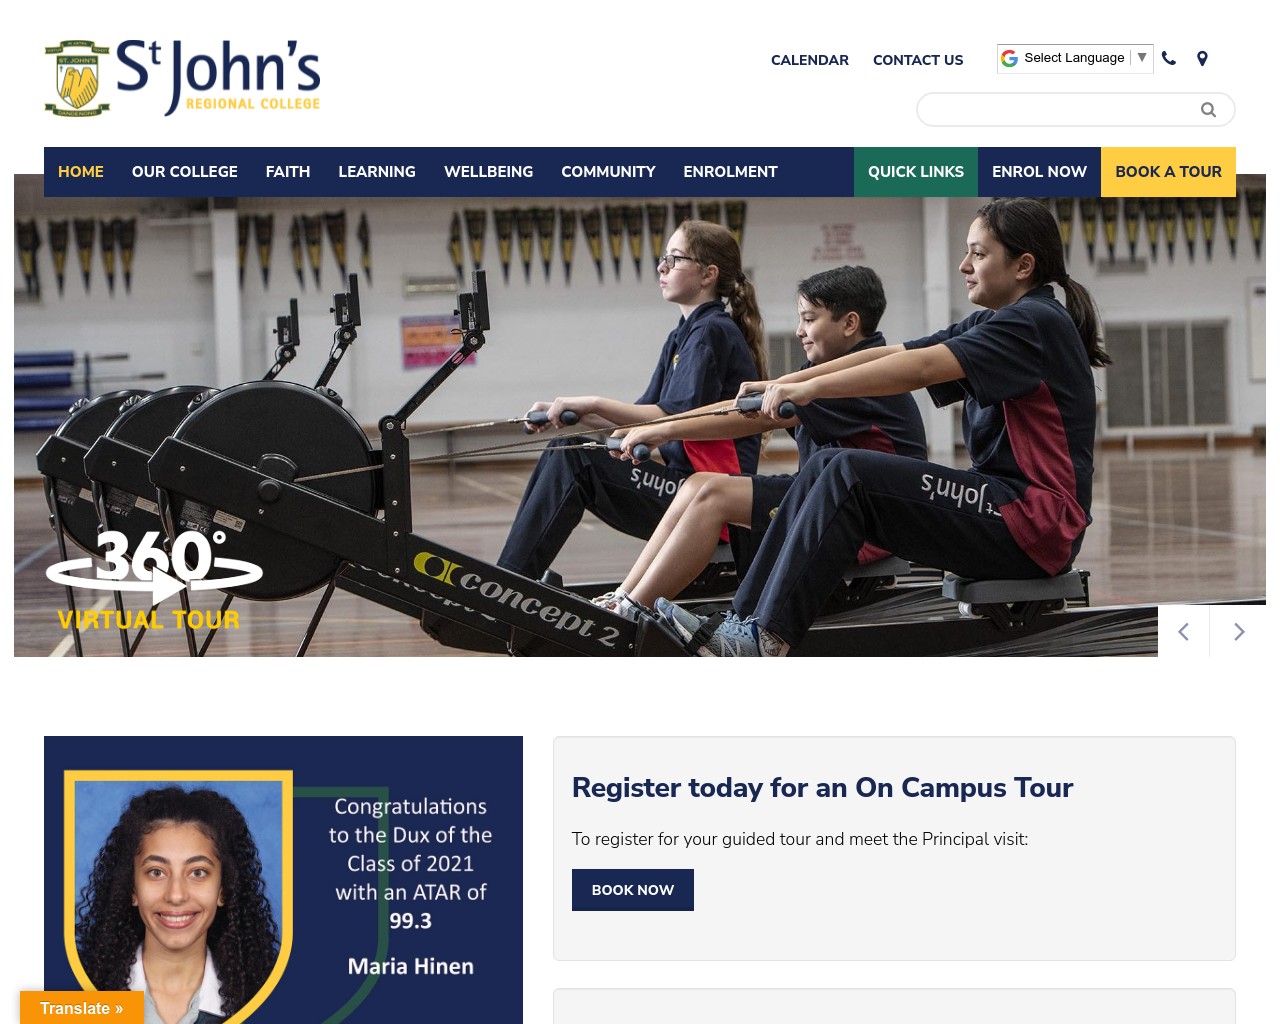 St Johns Regional College